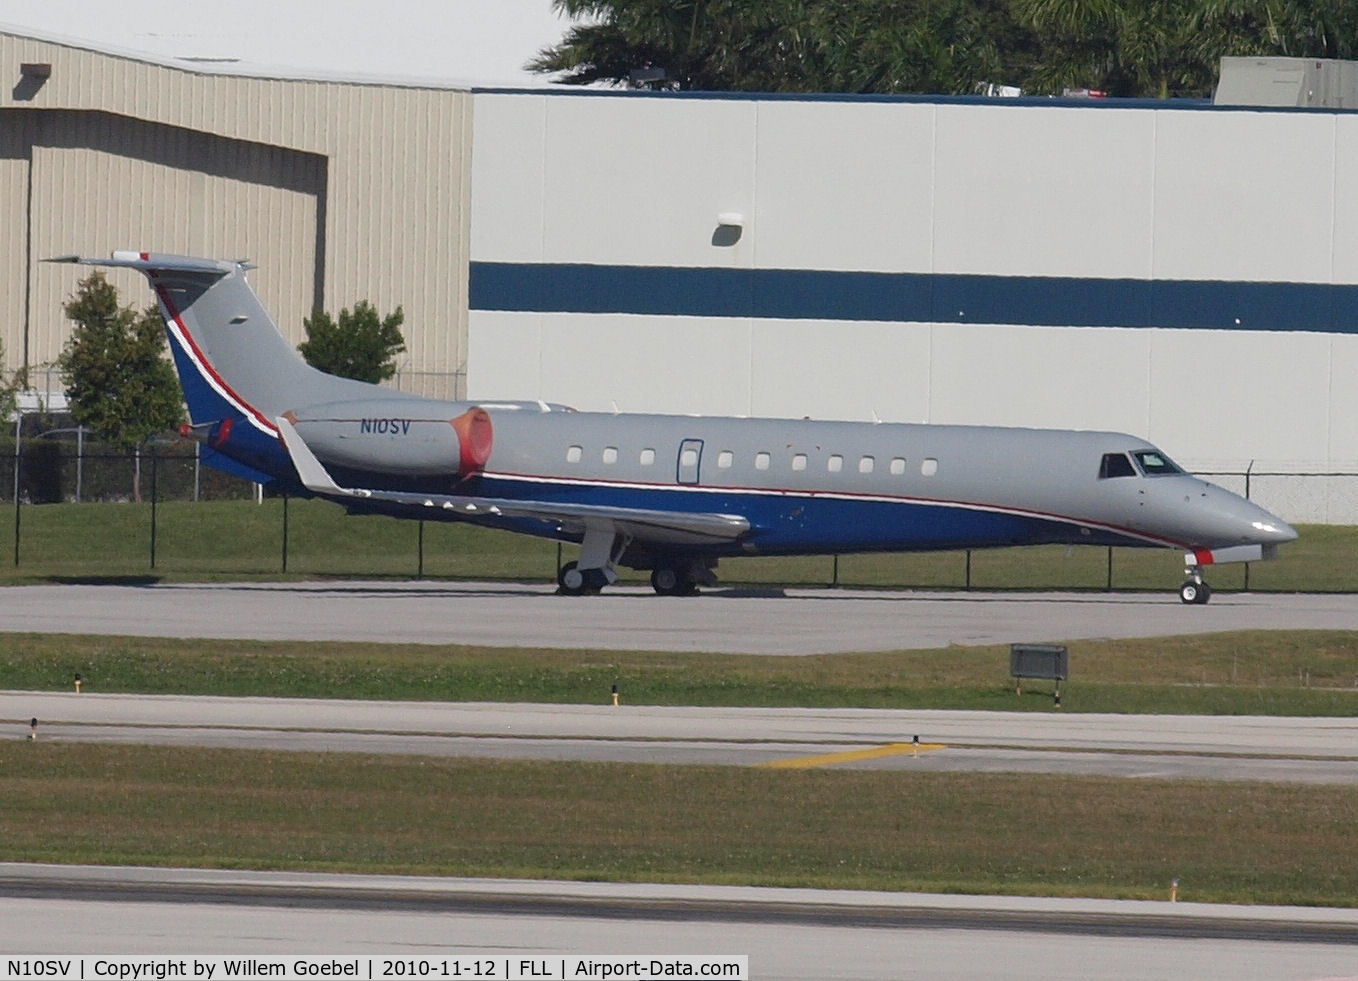 N10SV, 2006 Embraer EMB-135BJ Legacy C/N 14500974, Parking on Frt. Lauderdale Airport(FLL)